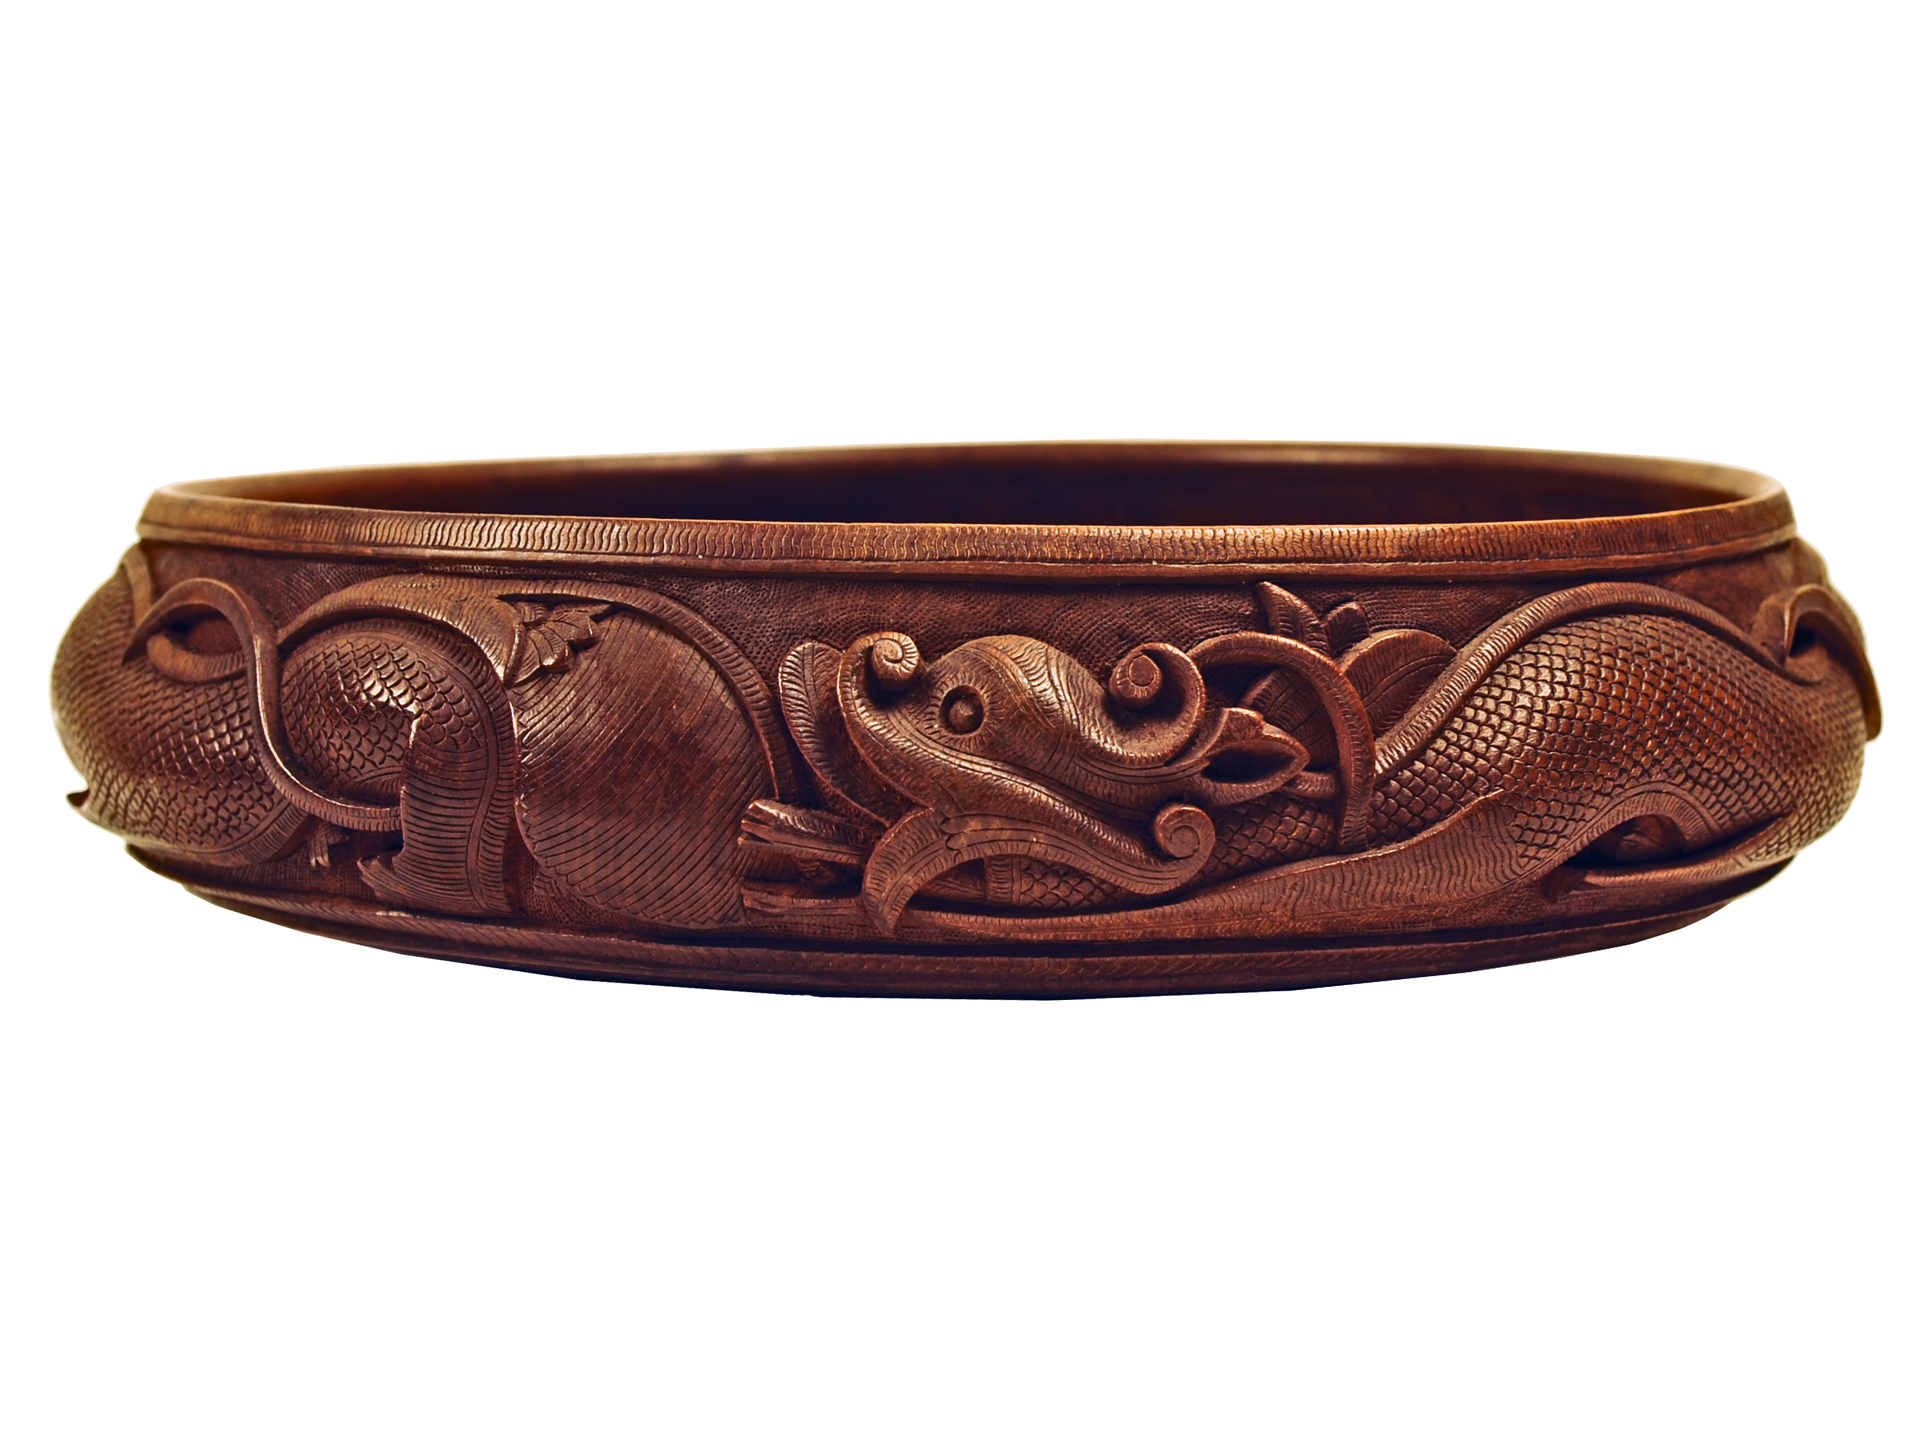 Carved Dragon Bowl